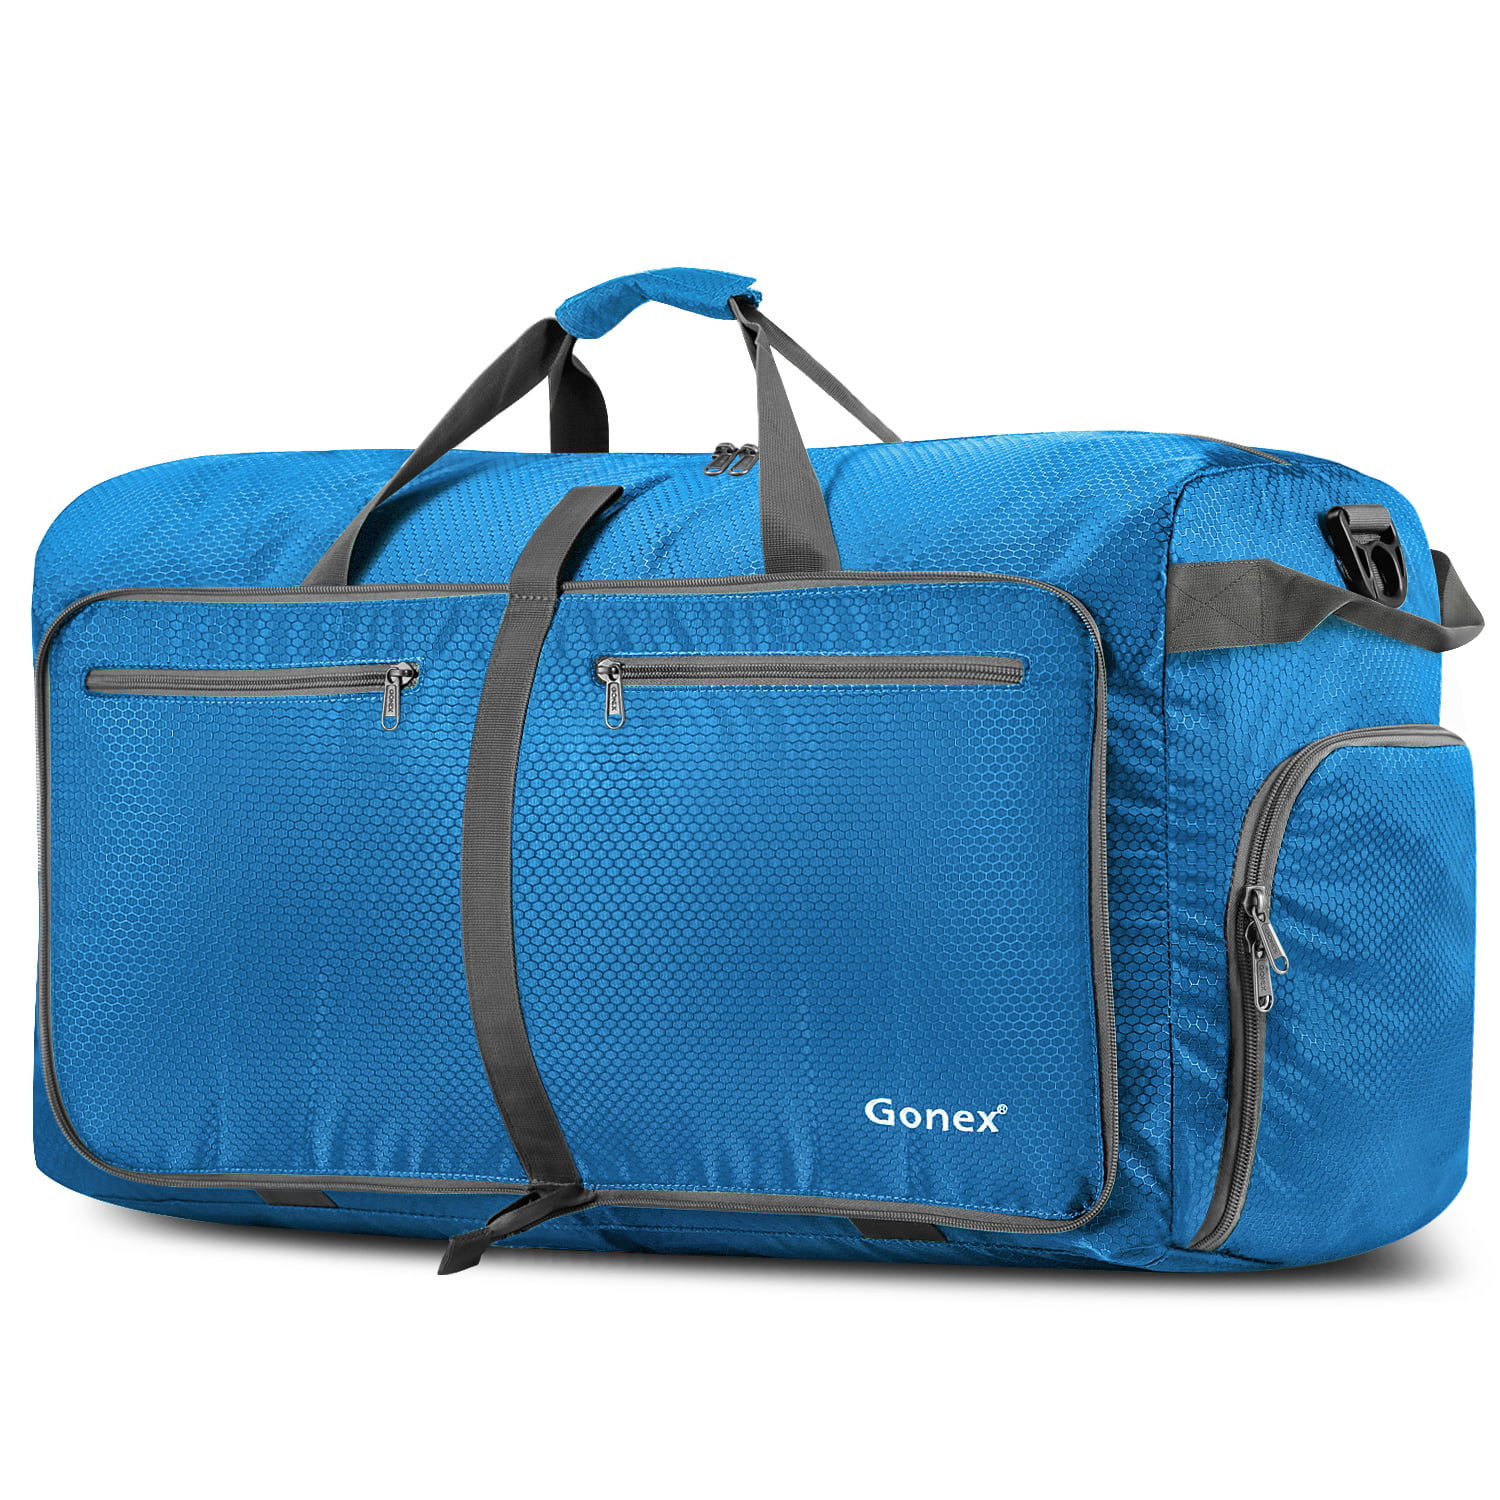 Gonex 100L Foldable Travel Duffle Bag, Extra Large Luggage Duffel blue - 0 - 0